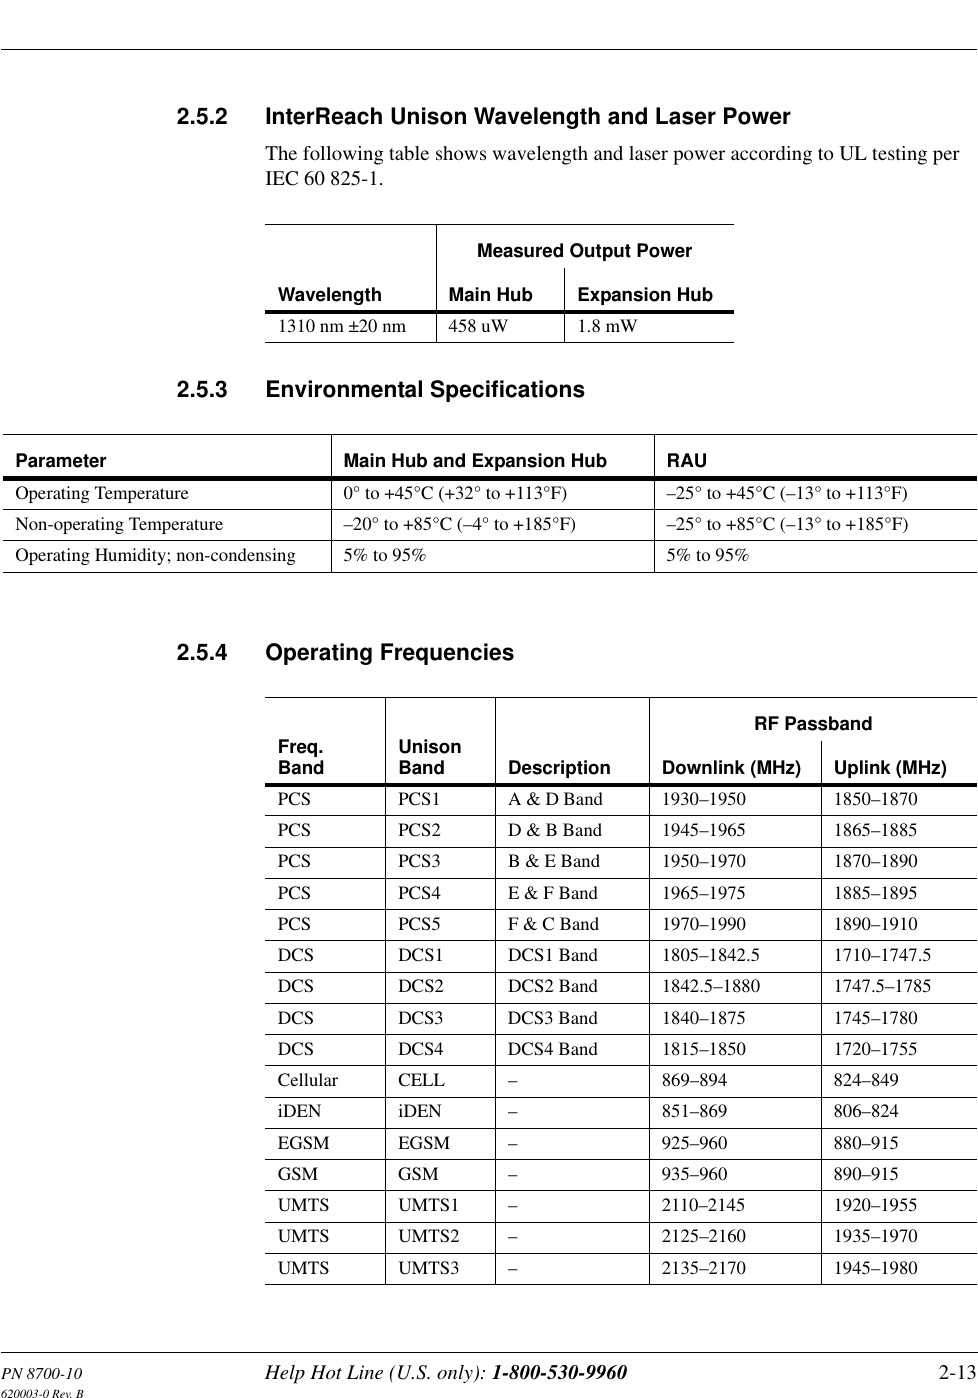 PN 8700-10 Help Hot Line (U.S. only): 1-800-530-9960 2-13620003-0 Rev. B2.5.2 InterReach Unison Wavelength and Laser PowerThe following table shows wavelength and laser power according to UL testing per IEC 60 825-1.2.5.3 Environmental Specifications2.5.4 Operating FrequenciesWavelengthMeasured Output PowerMain Hub Expansion Hub1310 nm ±20 nm 458 uW 1.8 mWParameter Main Hub and Expansion Hub RAUOperating Temperature  0° to +45°C (+32° to +113°F) –25° to +45°C (–13° to +113°F)Non-operating Temperature  –20° to +85°C (–4° to +185°F) –25° to +85°C (–13° to +185°F)Operating Humidity; non-condensing  5% to 95% 5% to 95%Freq.Band UnisonBand DescriptionRF PassbandDownlink (MHz)  Uplink (MHz)PCS PCS1 A &amp; D Band 1930–1950 1850–1870PCS PCS2 D &amp; B Band 1945–1965 1865–1885PCS PCS3 B &amp; E Band 1950–1970 1870–1890PCS PCS4 E &amp; F Band 1965–1975 1885–1895PCS PCS5 F &amp; C Band 1970–1990 1890–1910DCS DCS1 DCS1 Band 1805–1842.5 1710–1747.5DCS DCS2 DCS2 Band 1842.5–1880 1747.5–1785DCS DCS3 DCS3 Band 1840–1875 1745–1780DCS DCS4 DCS4 Band 1815–1850 1720–1755Cellular CELL – 869–894 824–849iDEN iDEN – 851–869 806–824EGSM EGSM – 925–960 880–915GSM GSM – 935–960 890–915UMTS UMTS1 – 2110–2145 1920–1955UMTS UMTS2 – 2125–2160 1935–1970UMTS UMTS3 – 2135–2170 1945–1980